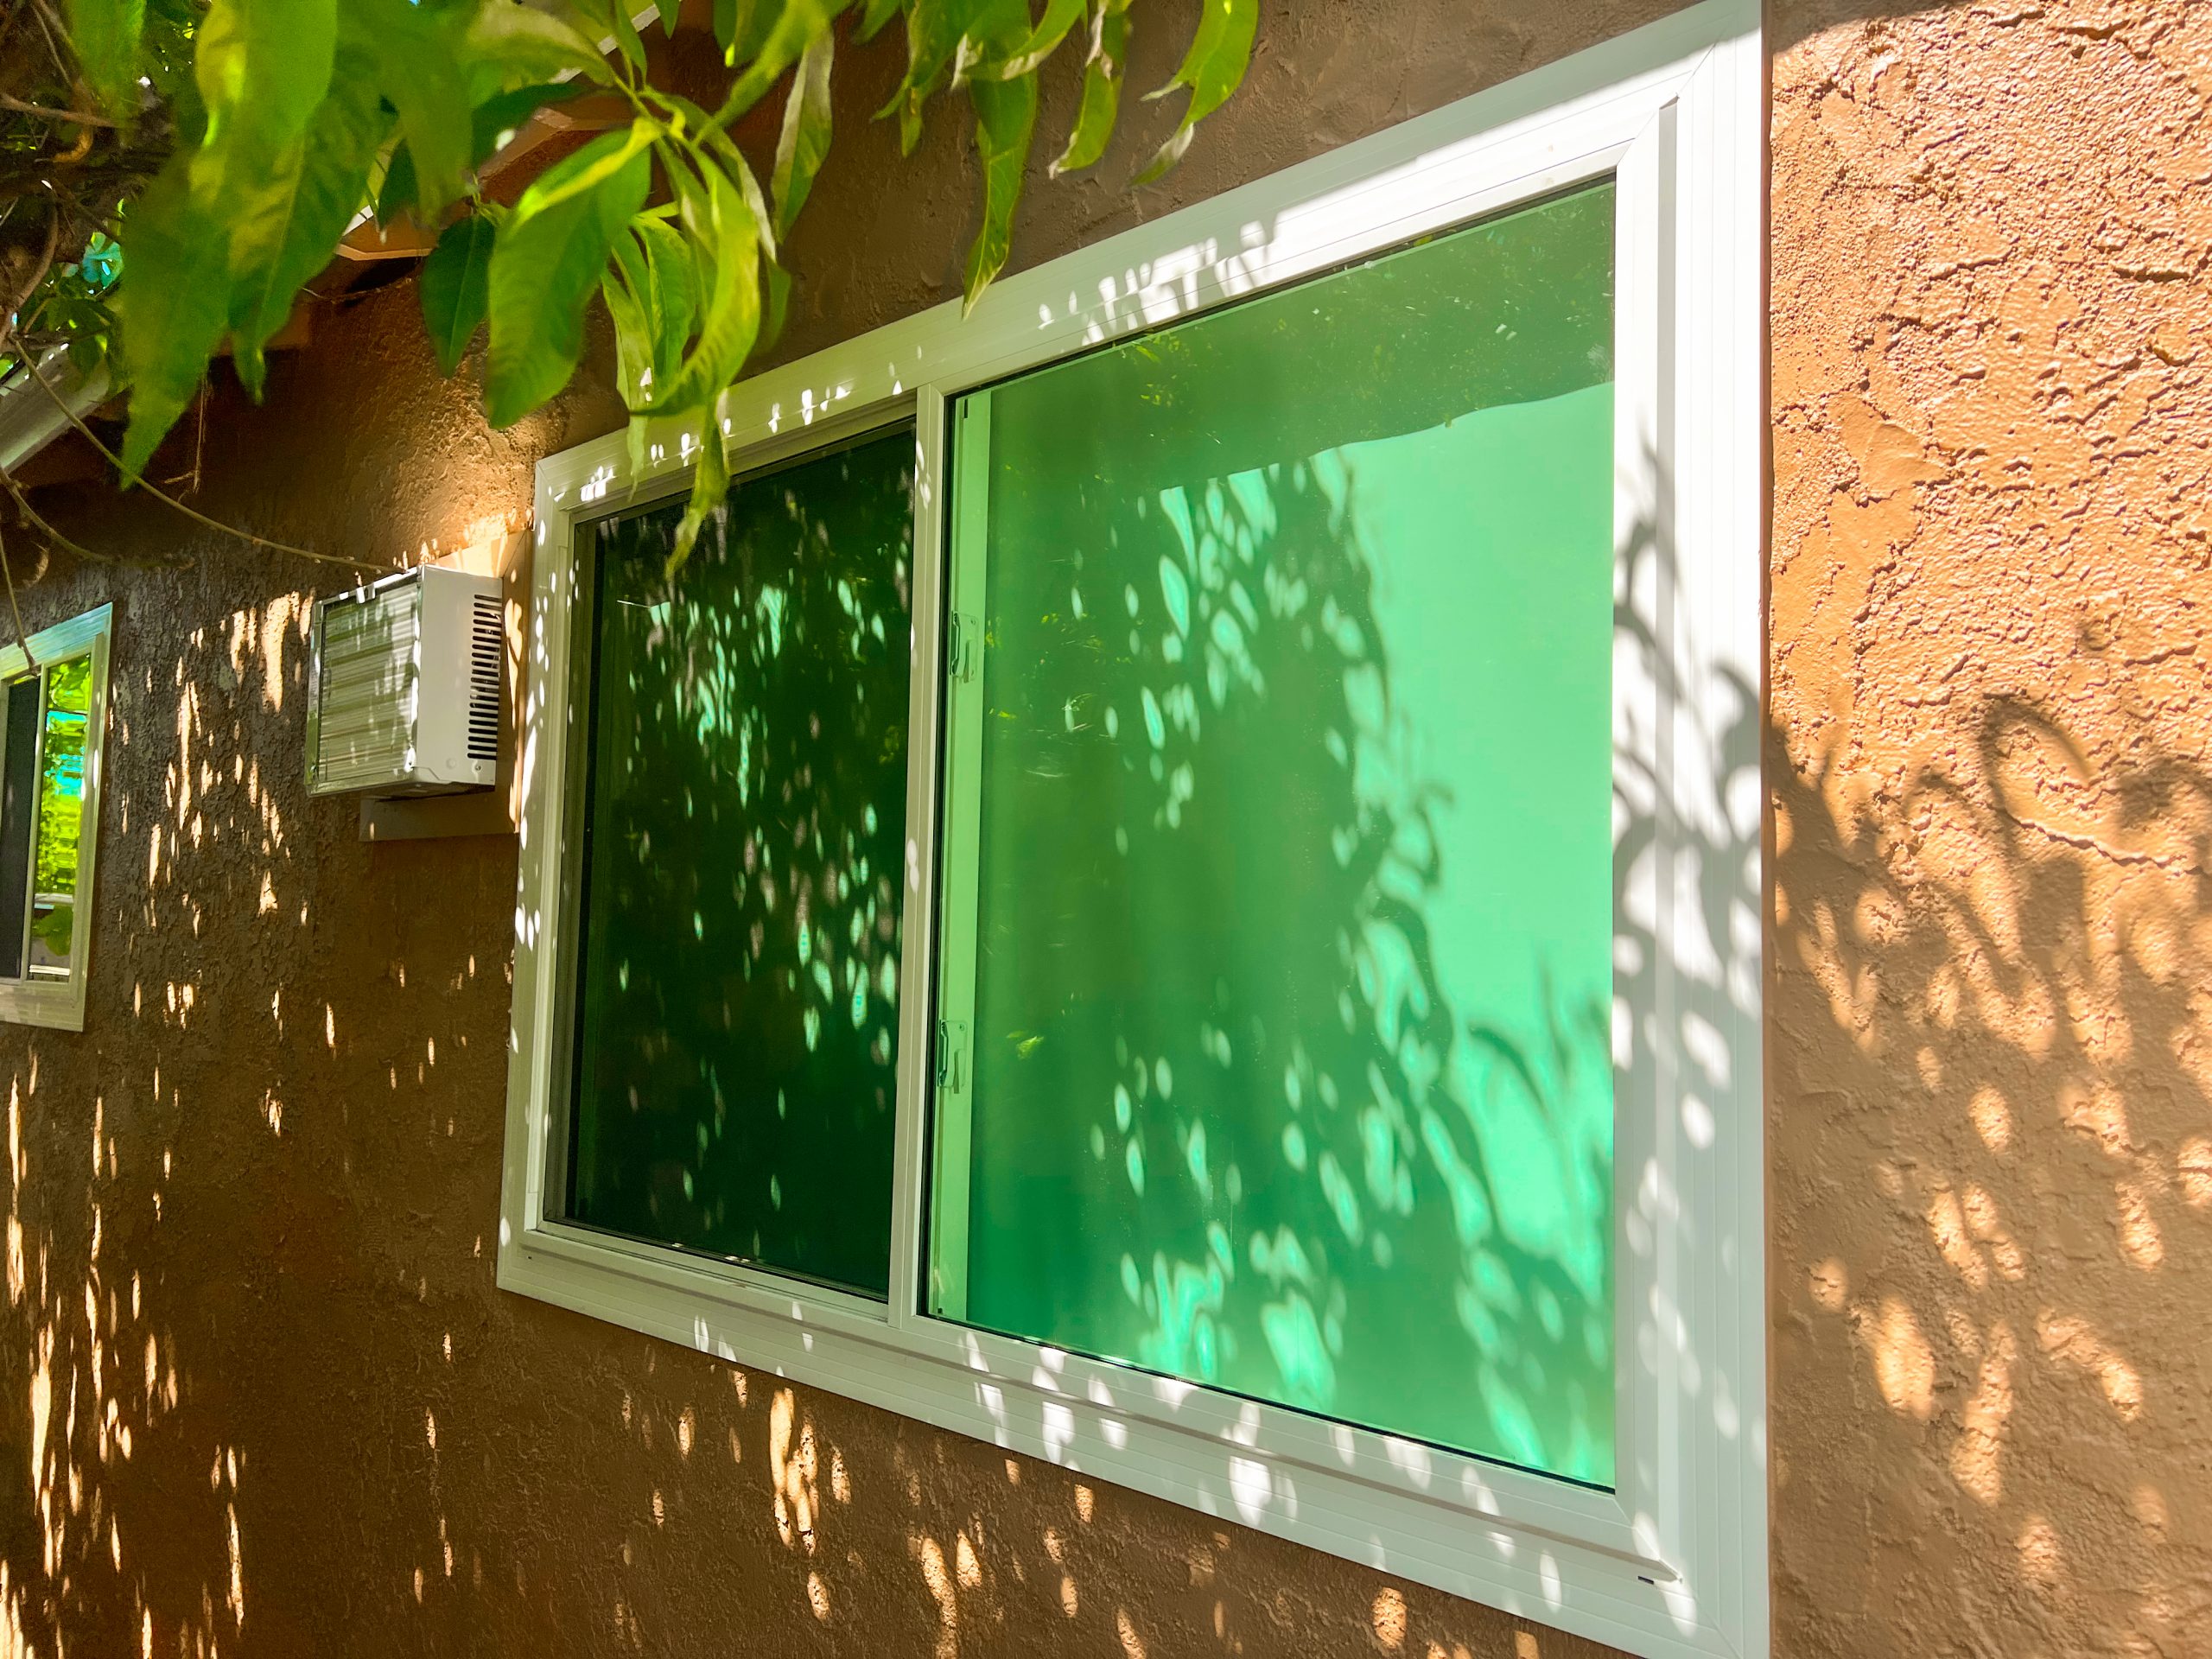 Window Replacement & Tex-Cote Paint Job in Montebello, CA